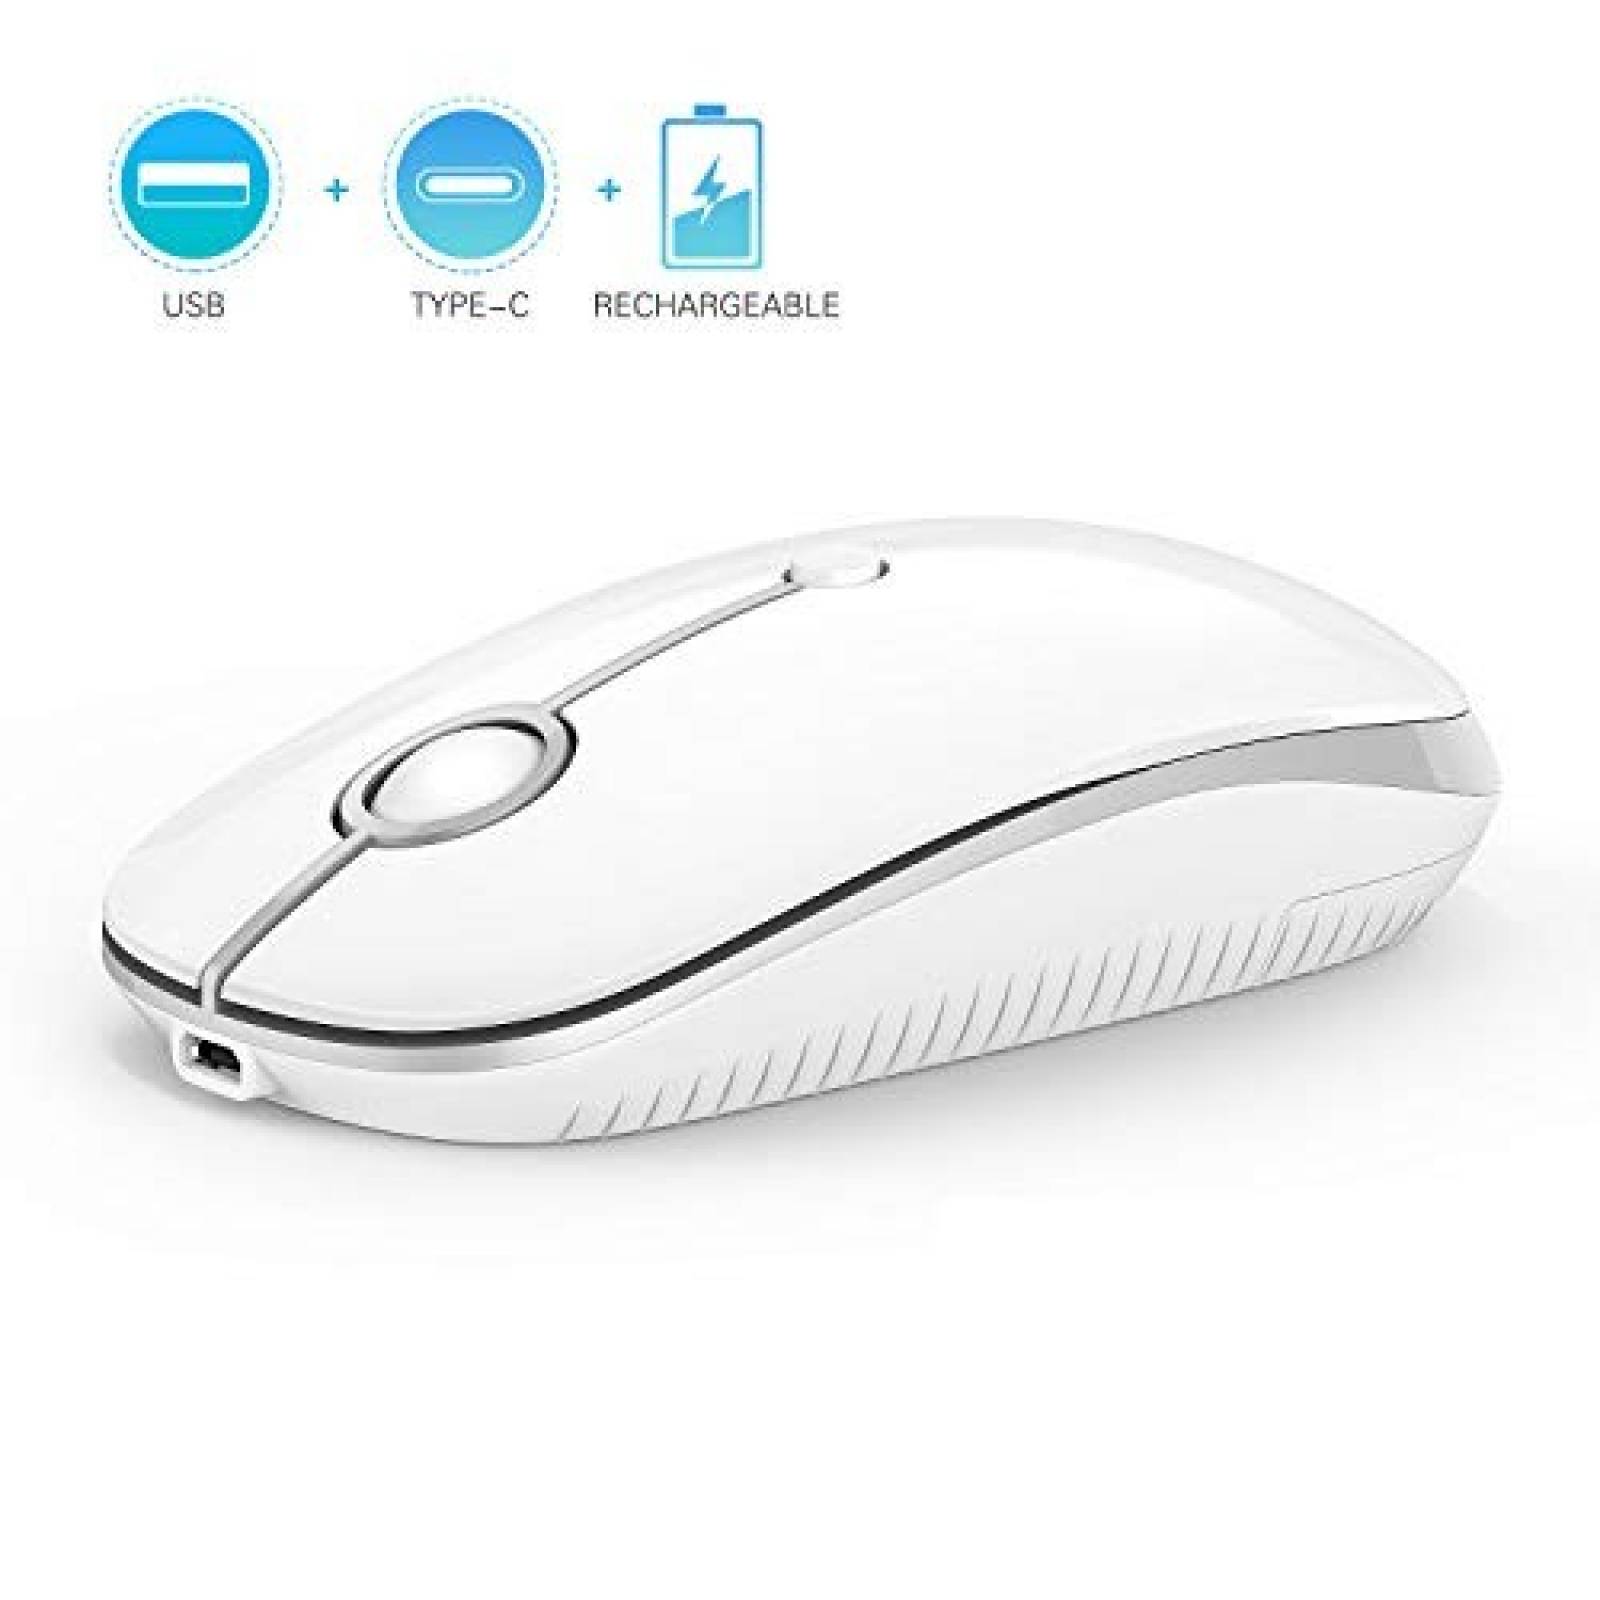 Mouse inalámbrico Jelly Comb recepetor USB y USB C -Blanco